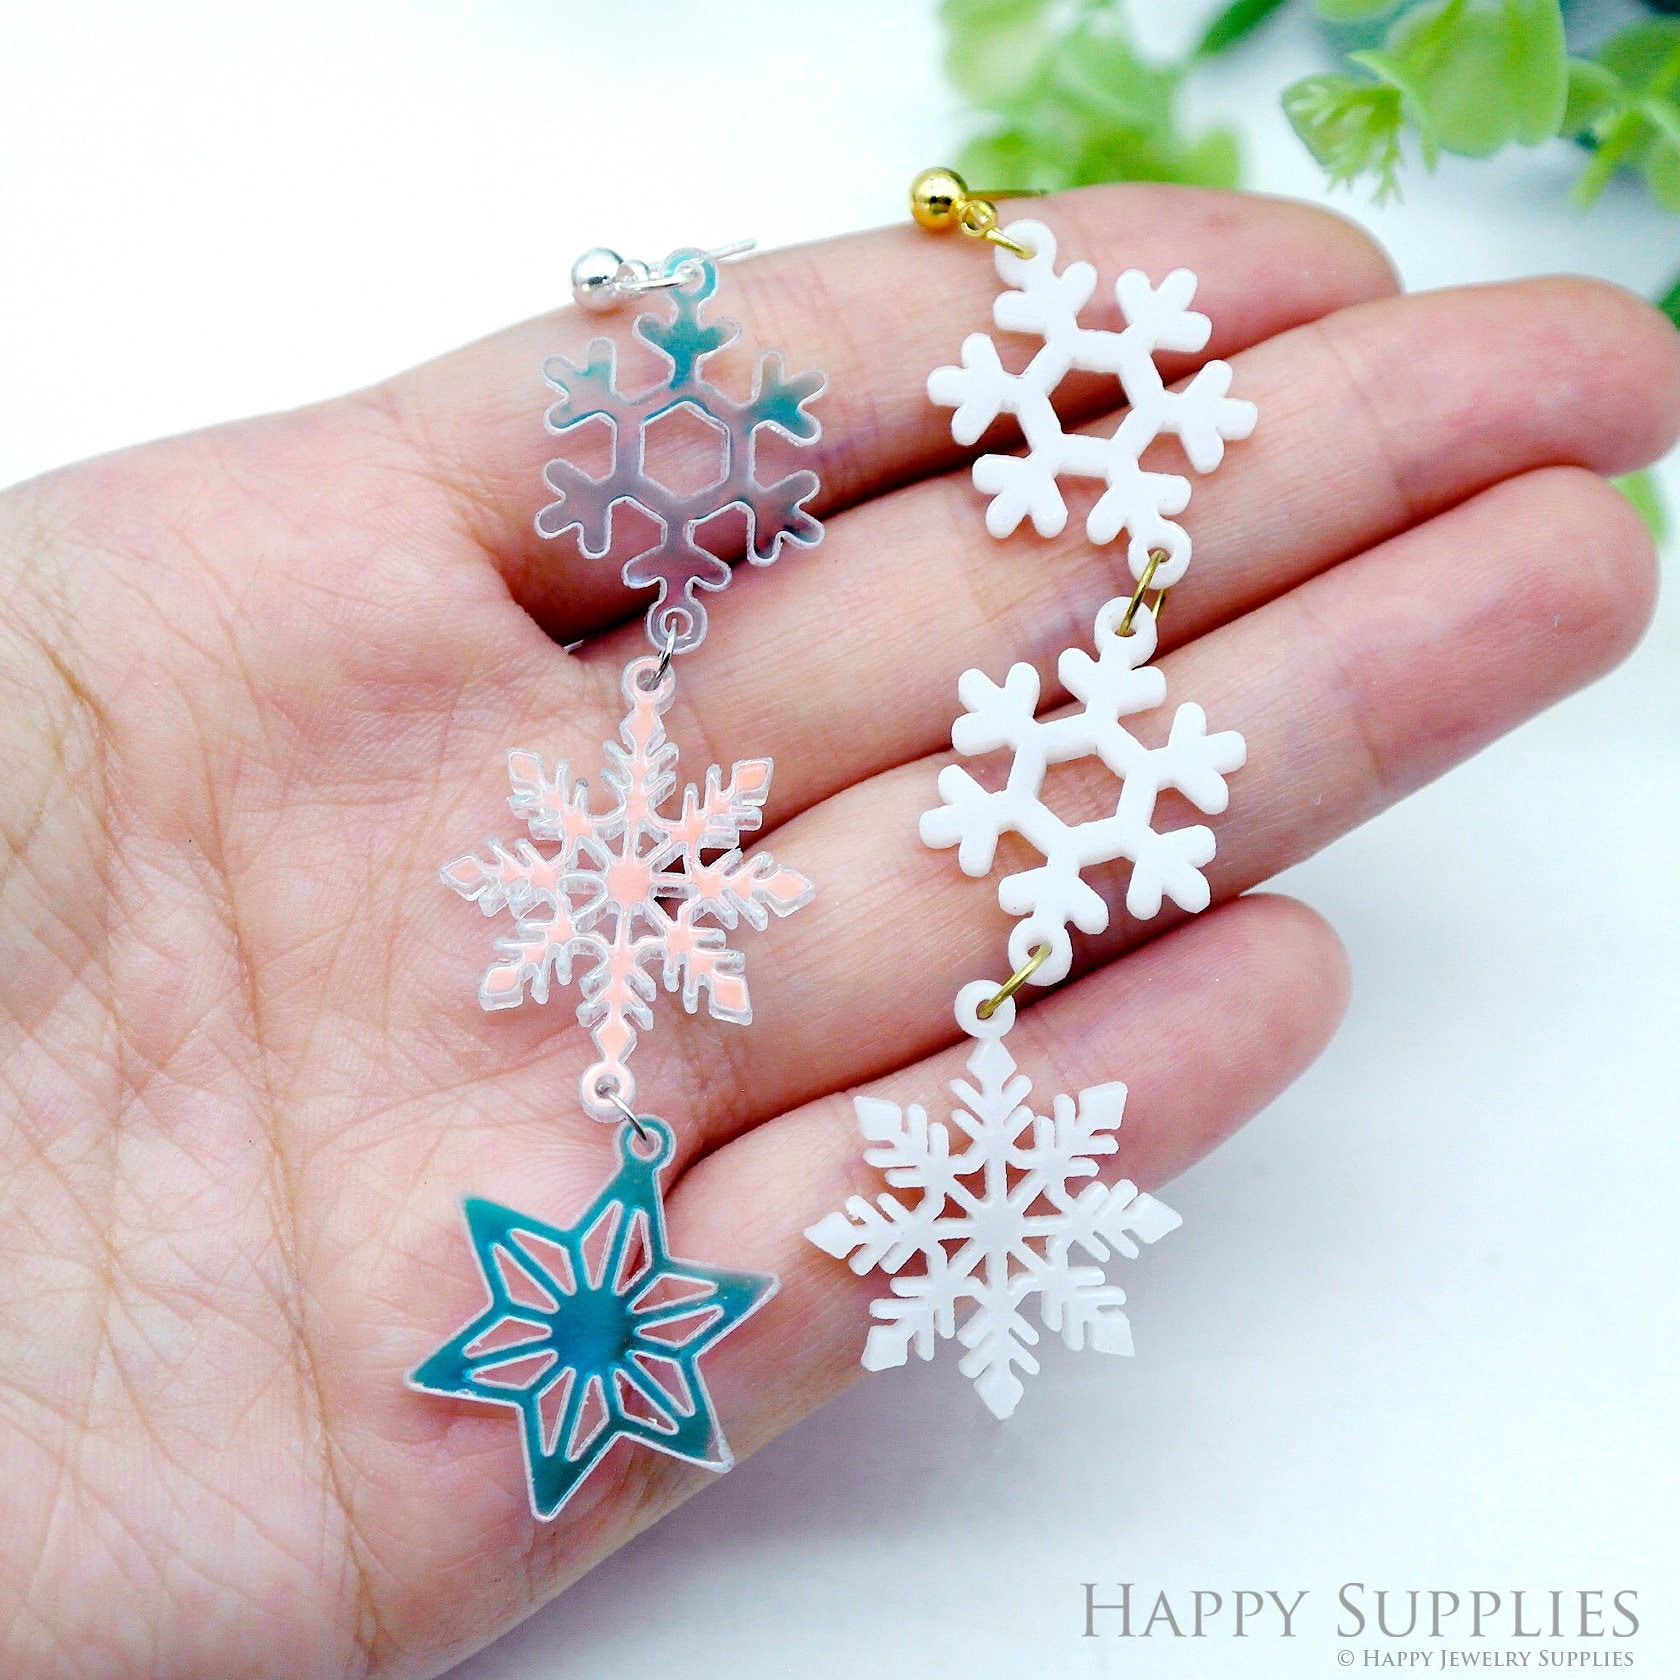 Yodoinky 20pcs Christmas Snowflake Nail Charms, Silver Snowflake Charms for Acrylic Nails,3D Alloy Snowflake Nail Charms for Women DIY Winter Christmas Nails